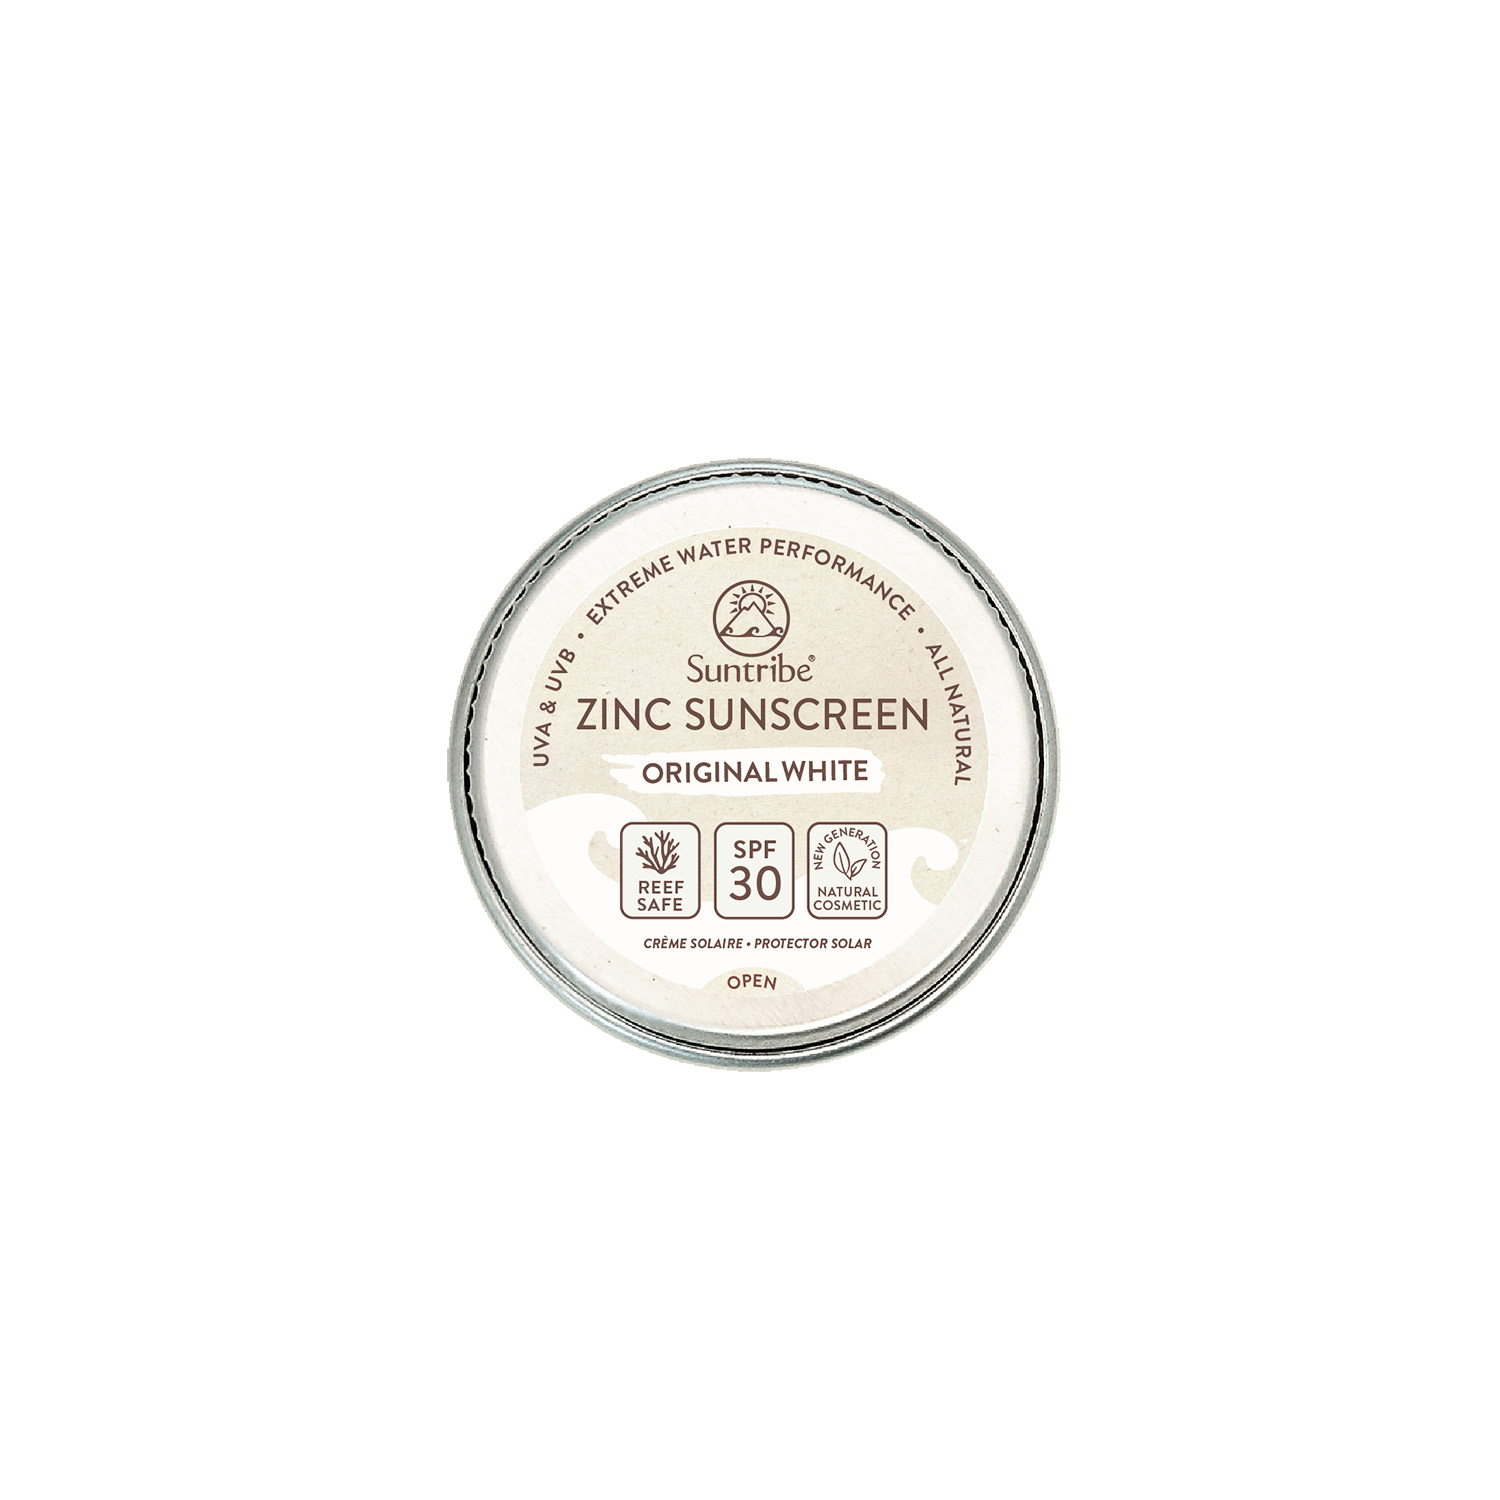 Zinc Sunscreen Mini Face & Sport SPF 30 - Original White, 15 g